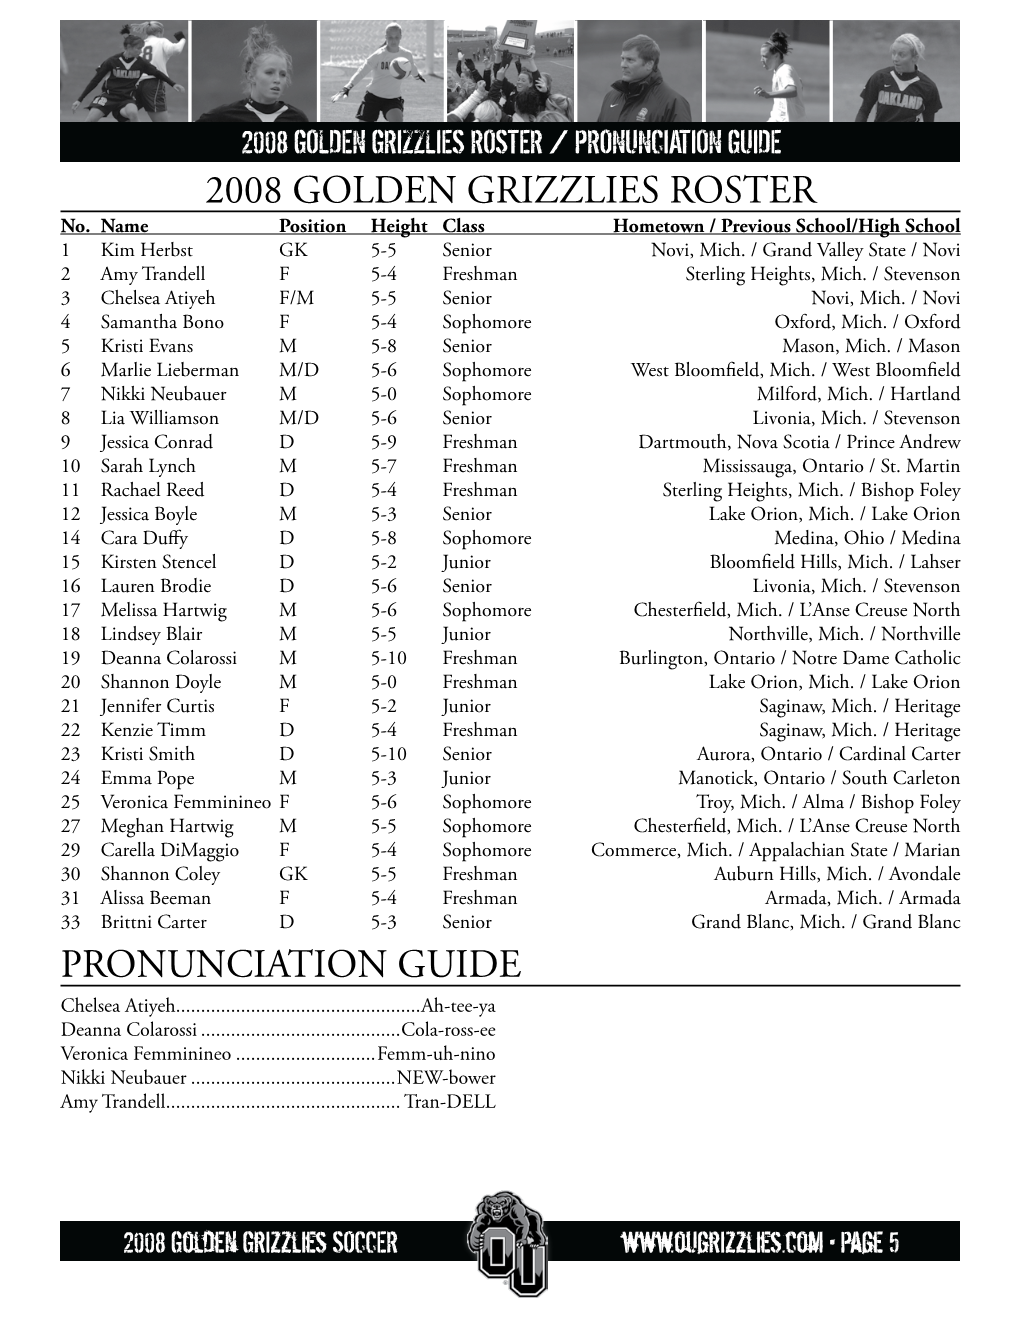 2008 Golden Grizzlies Roster Pronunciation Guide